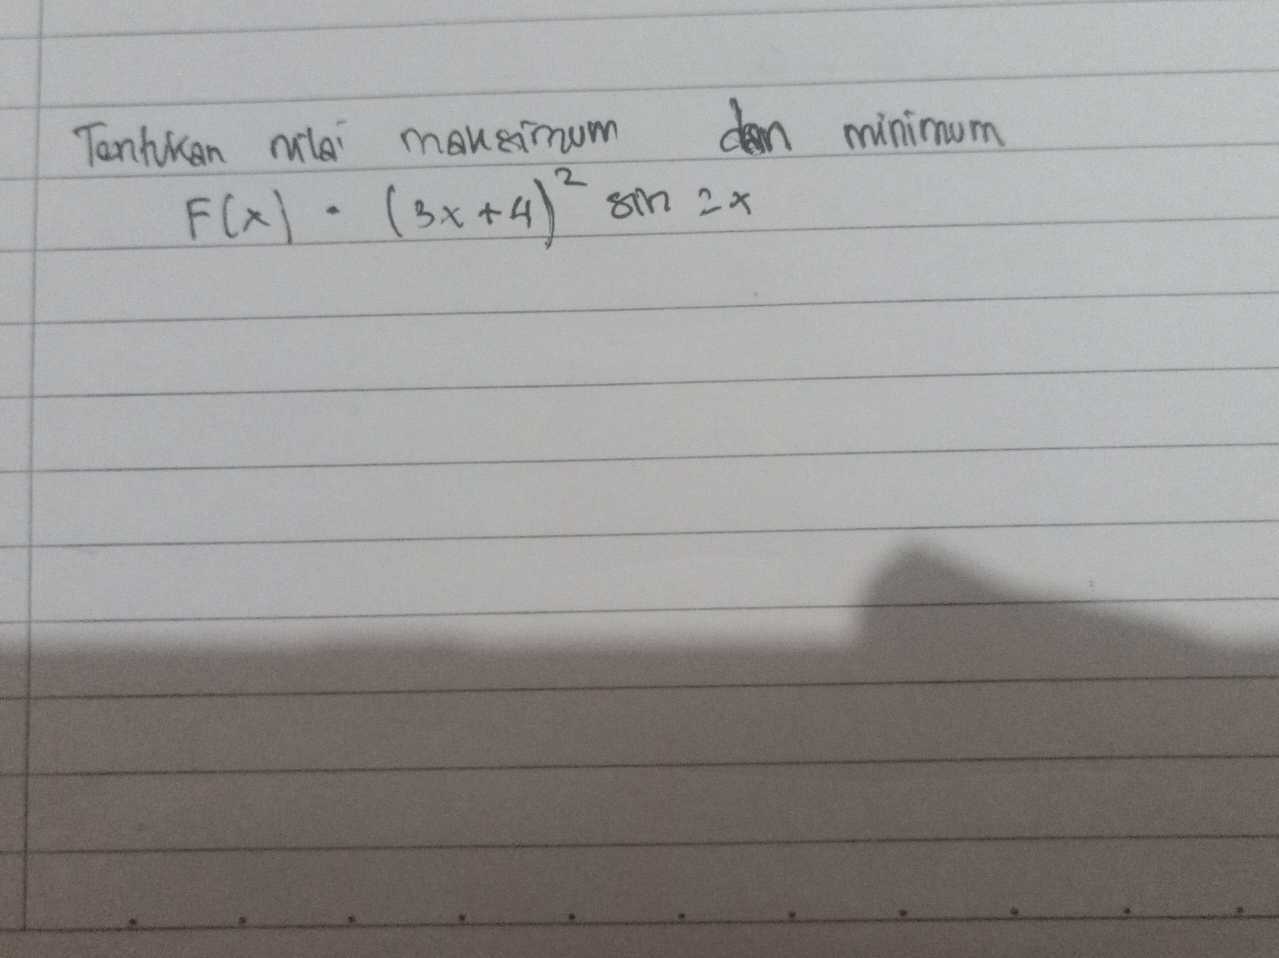 dan minimum Tentukan nilai mansimum F F(x) (3x+4) sin 2x 